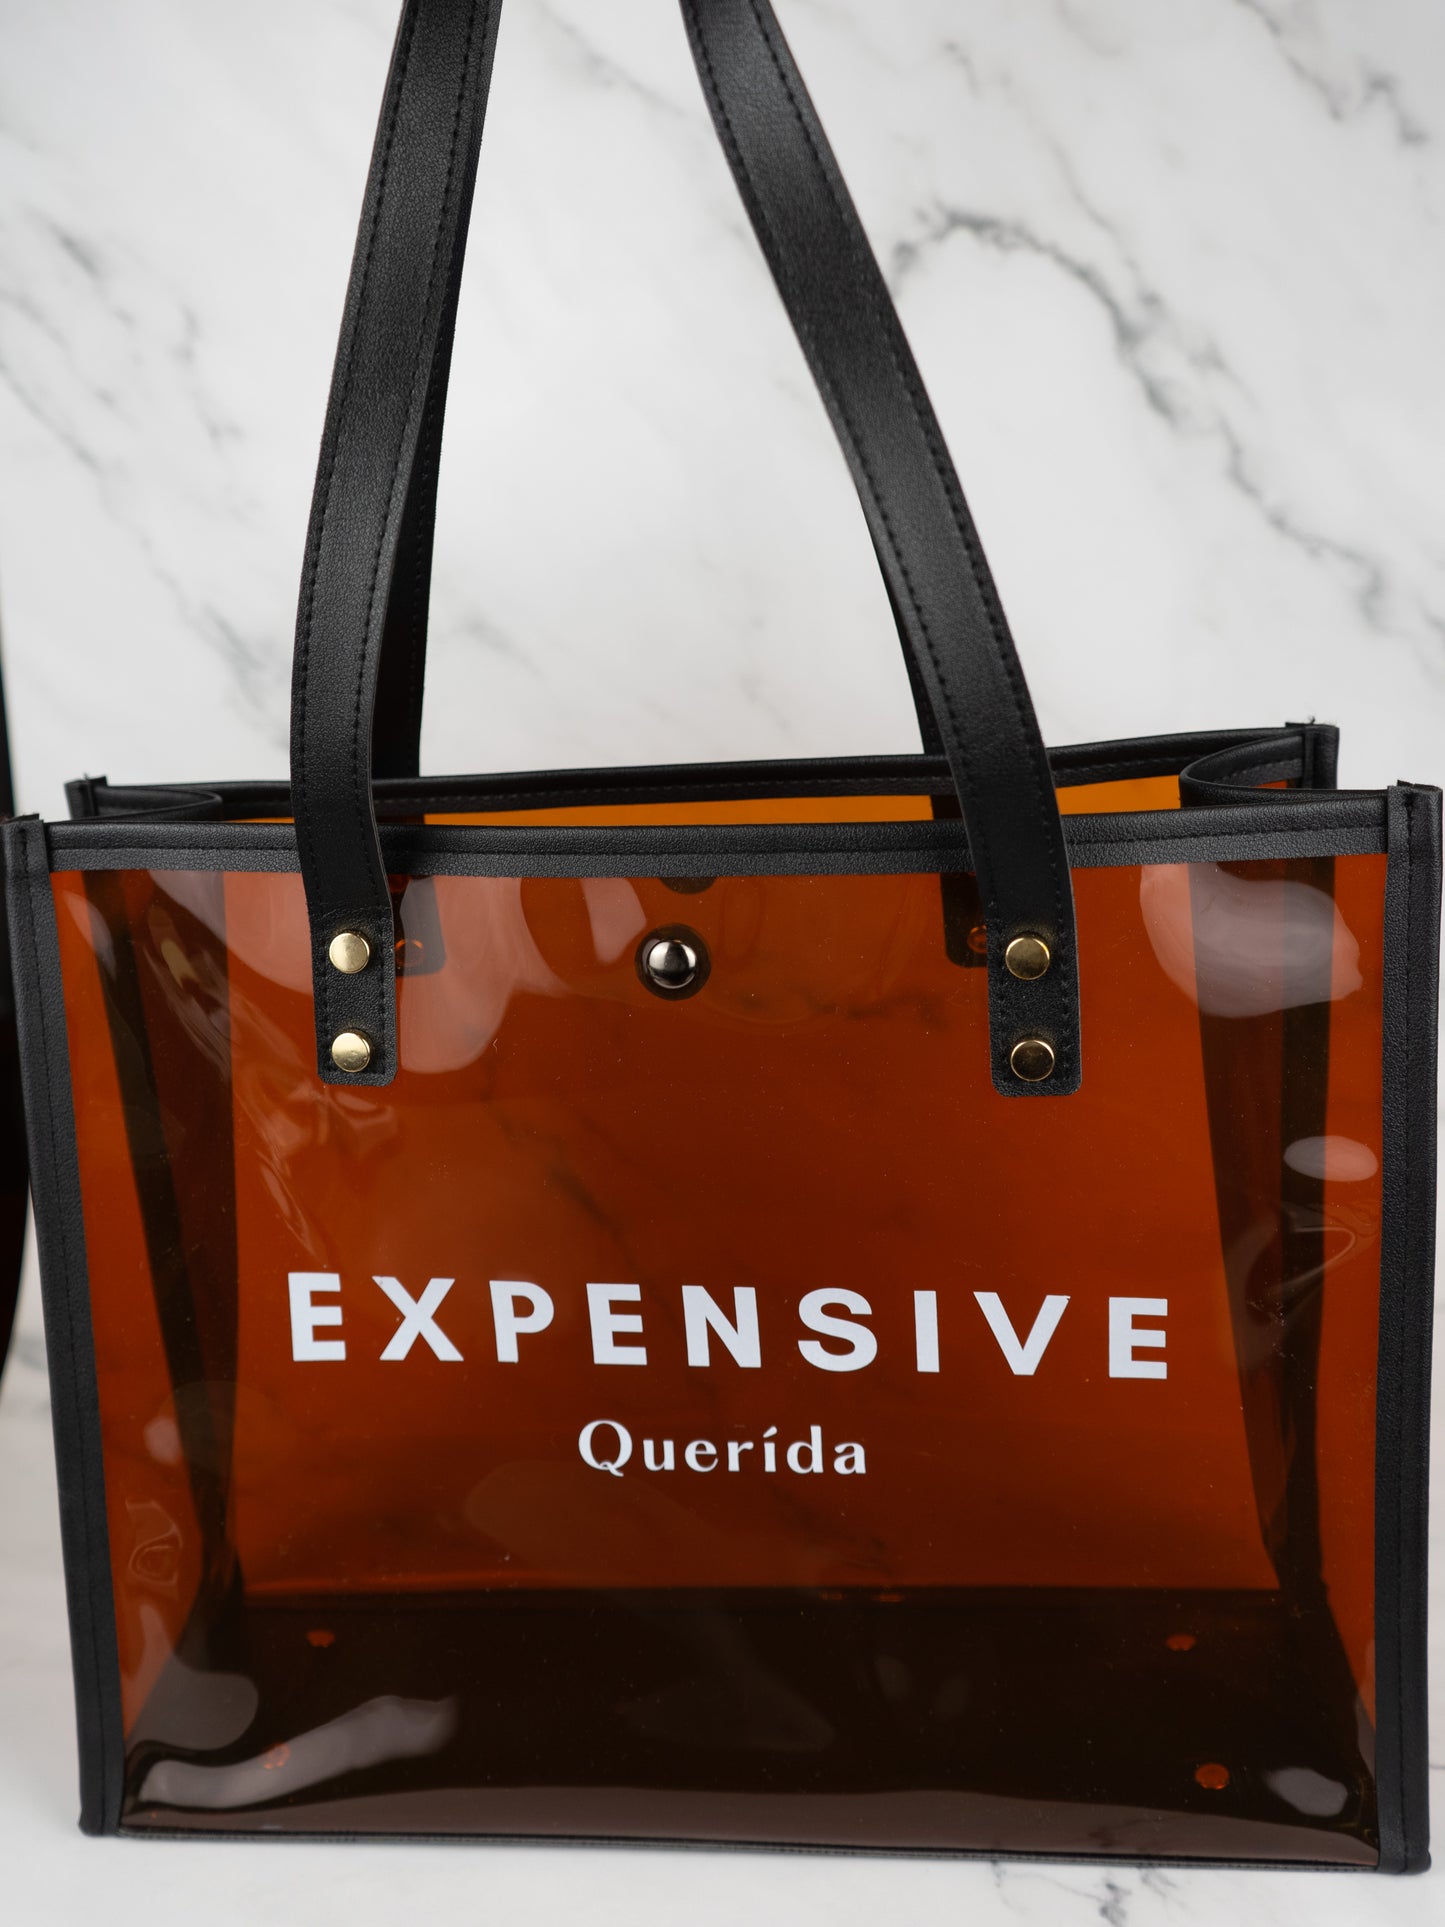 'Expensive' Tote Bag